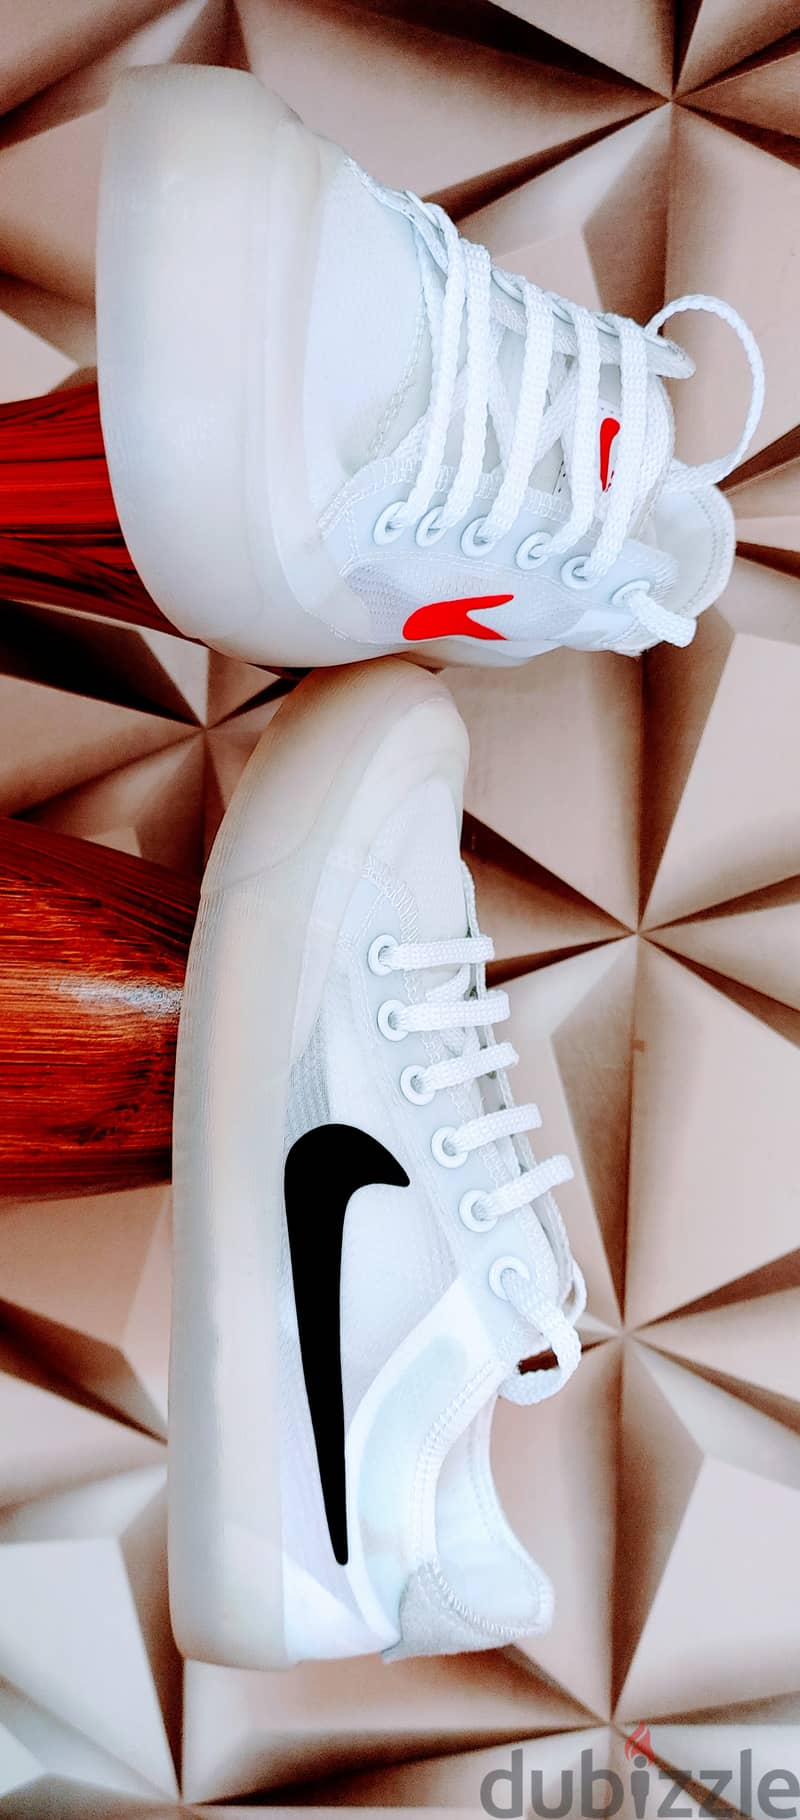 Nike shoes mesh transparent size 37شفاف نايك حريمي مقاس 5